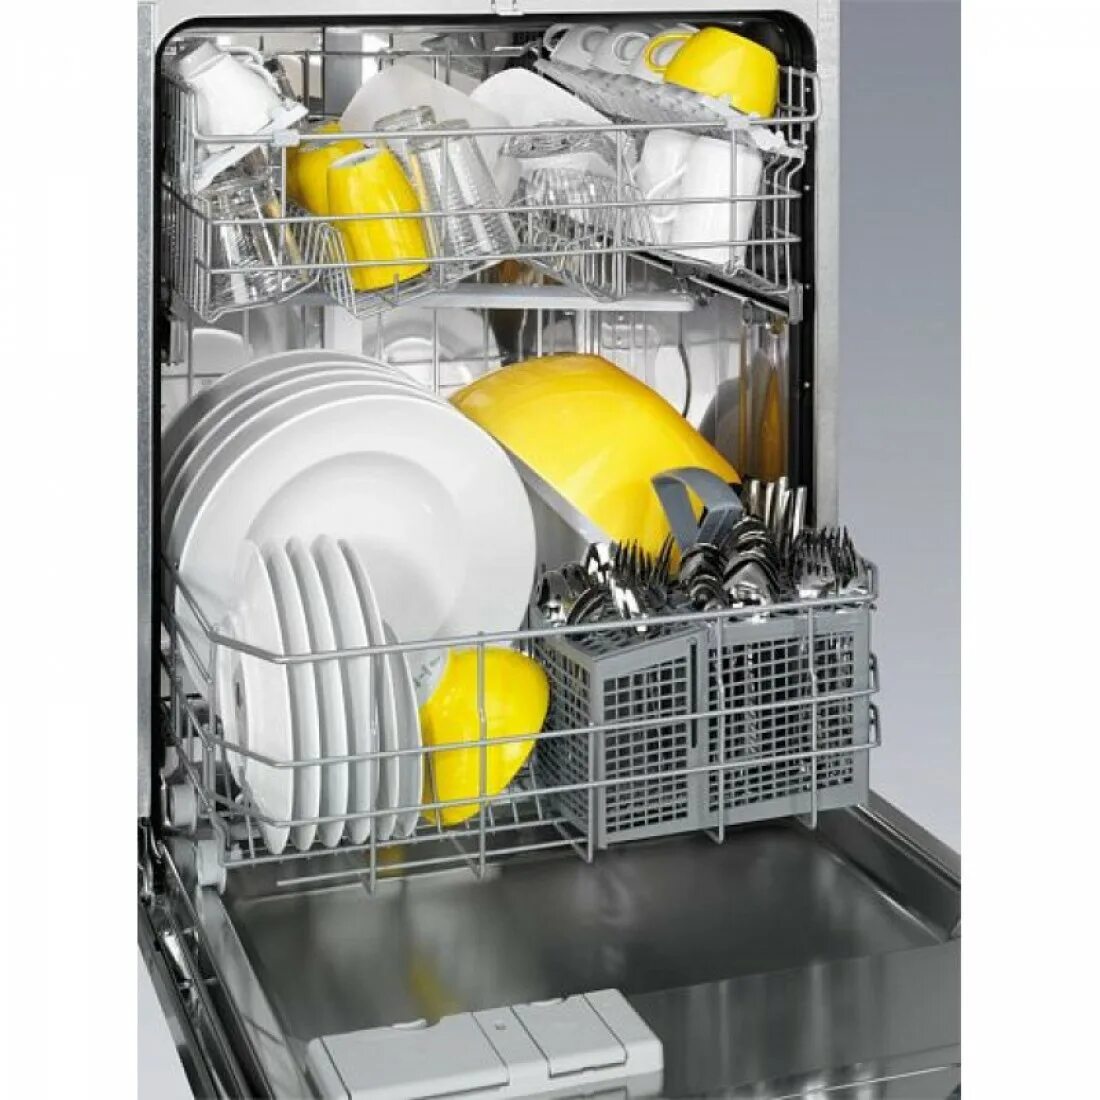 Zanussi ZDT 16011 fa. Посудомоечная машина Zanussi ZDT 921006 F. Посудомоечная машина de Dietrich DQH 740 je1. Посудомоечная машина Zanussi ZDT 111. Где можно купить посудомоечная